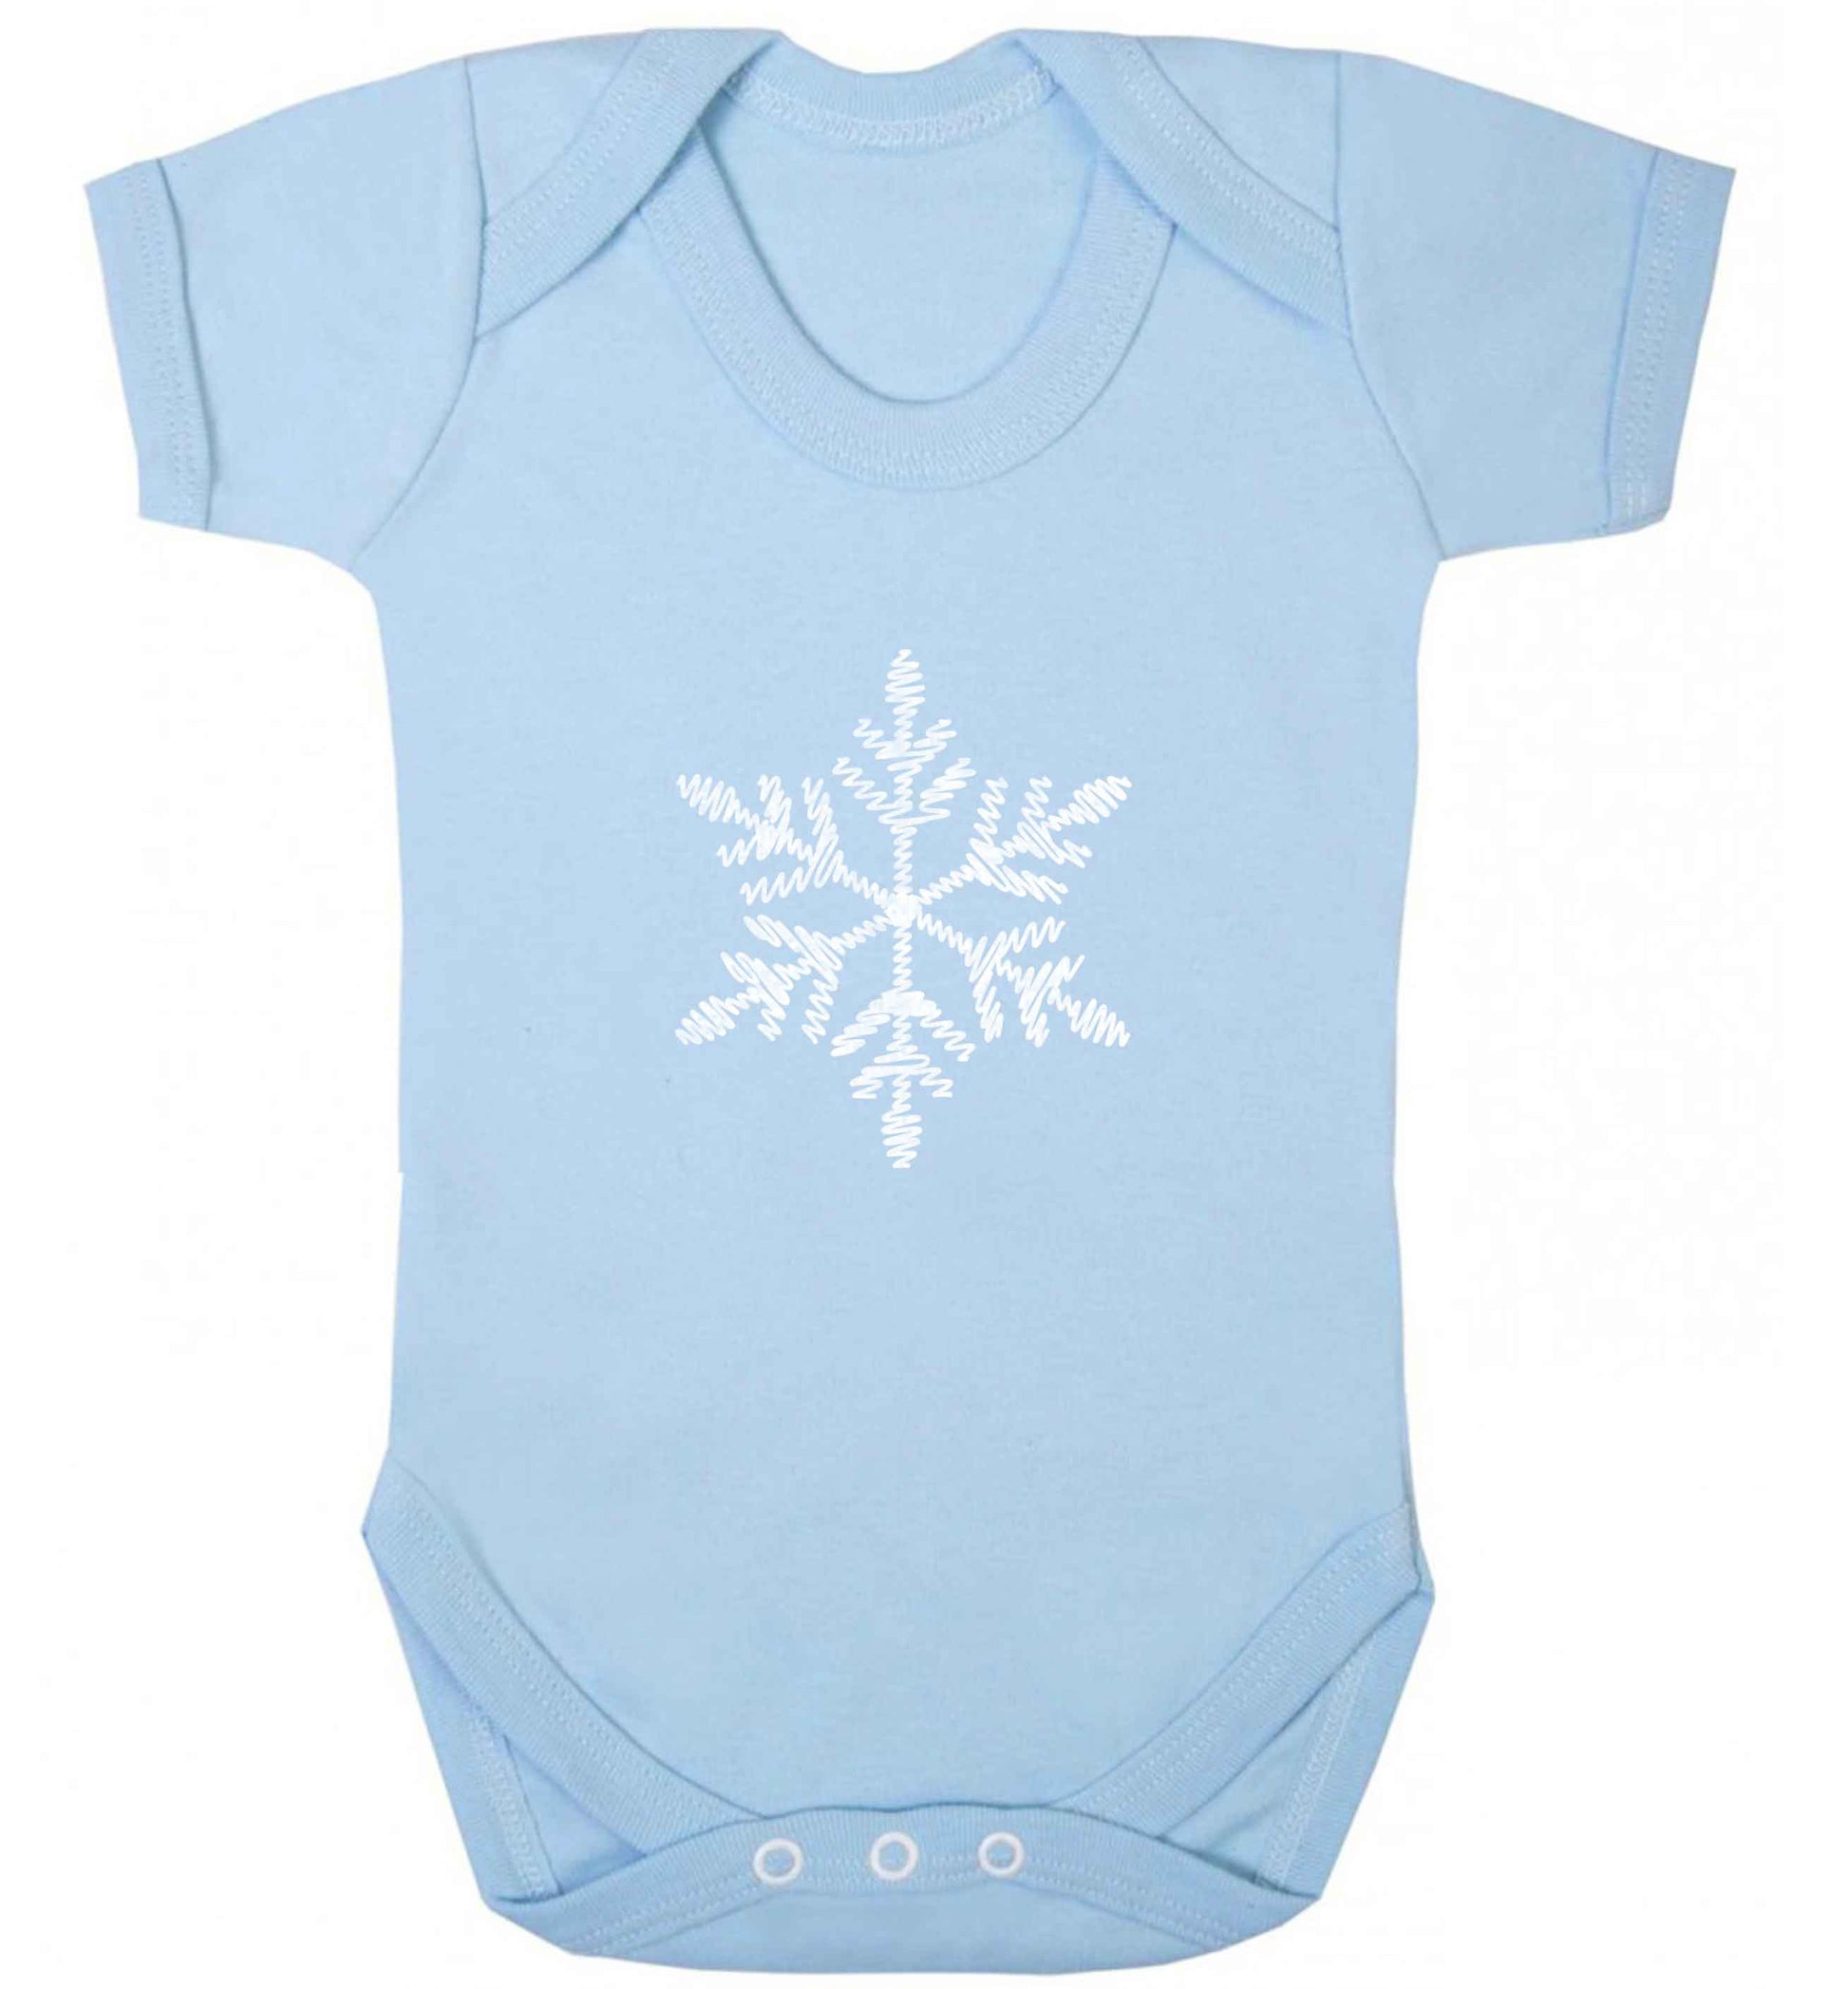 Snowflake baby vest pale blue 18-24 months